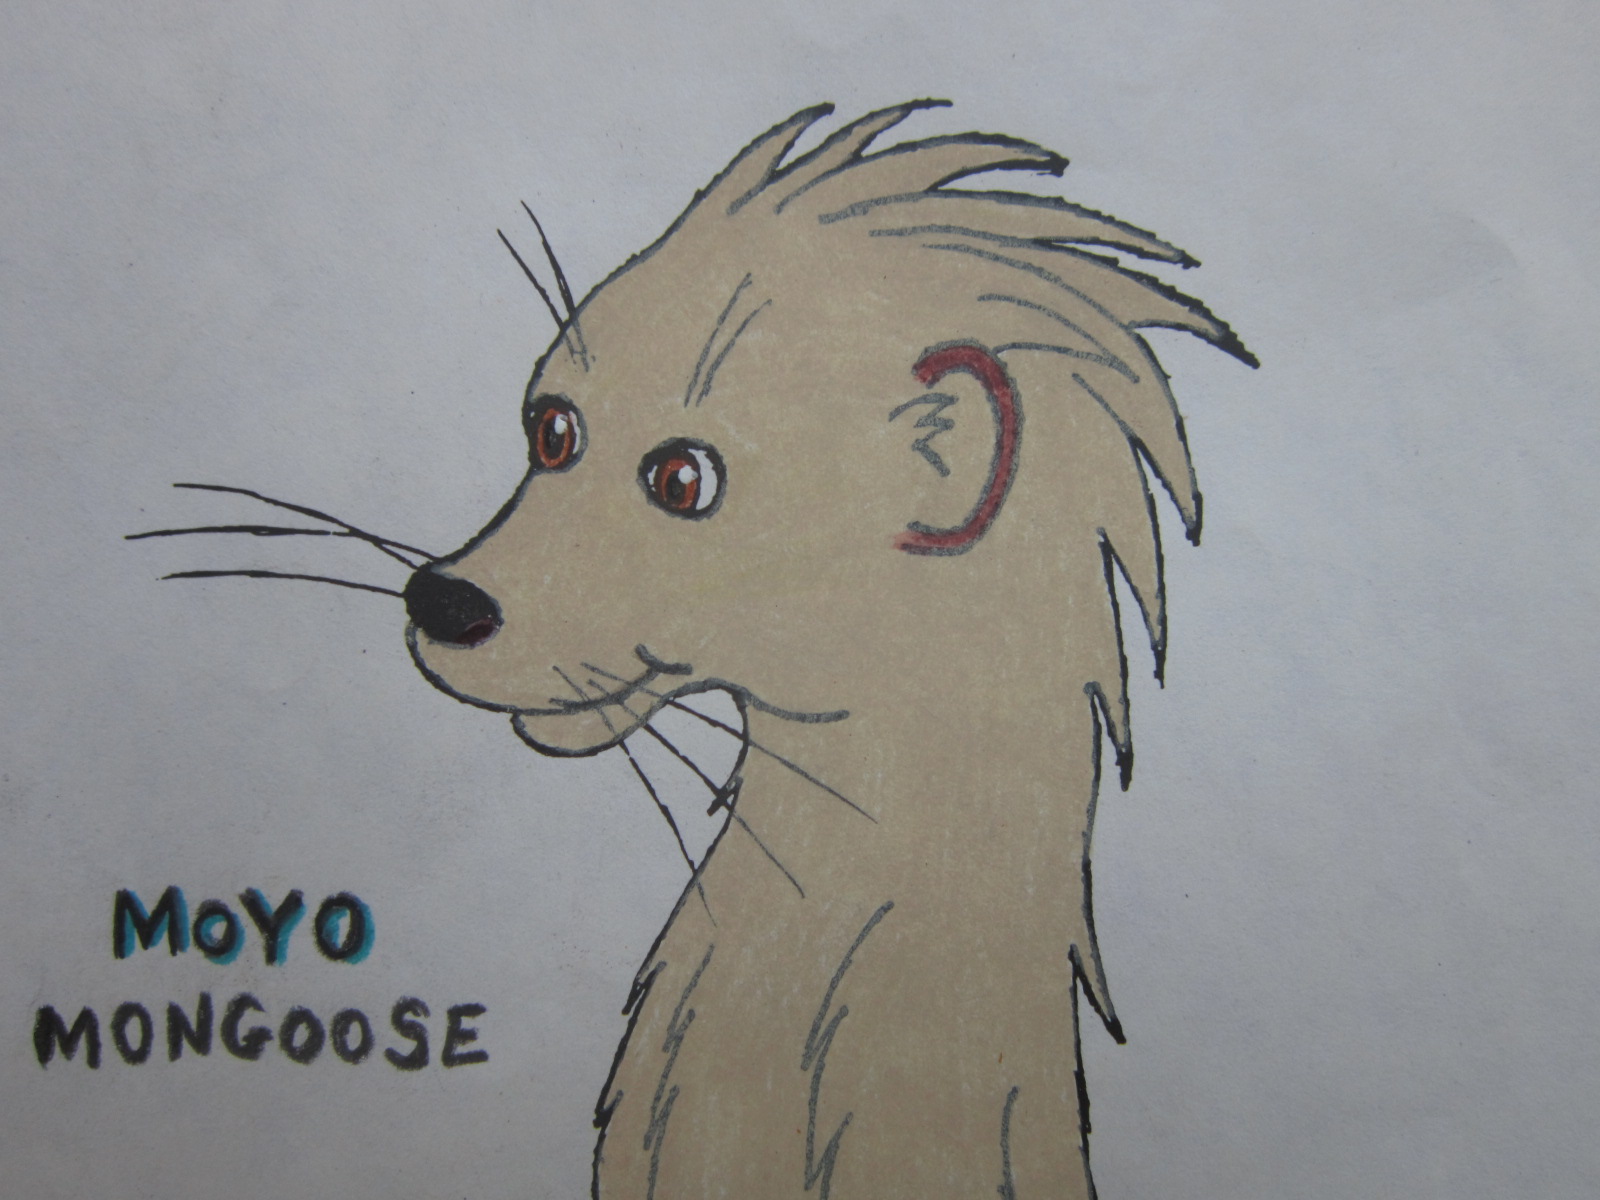 Moyo Mongoose